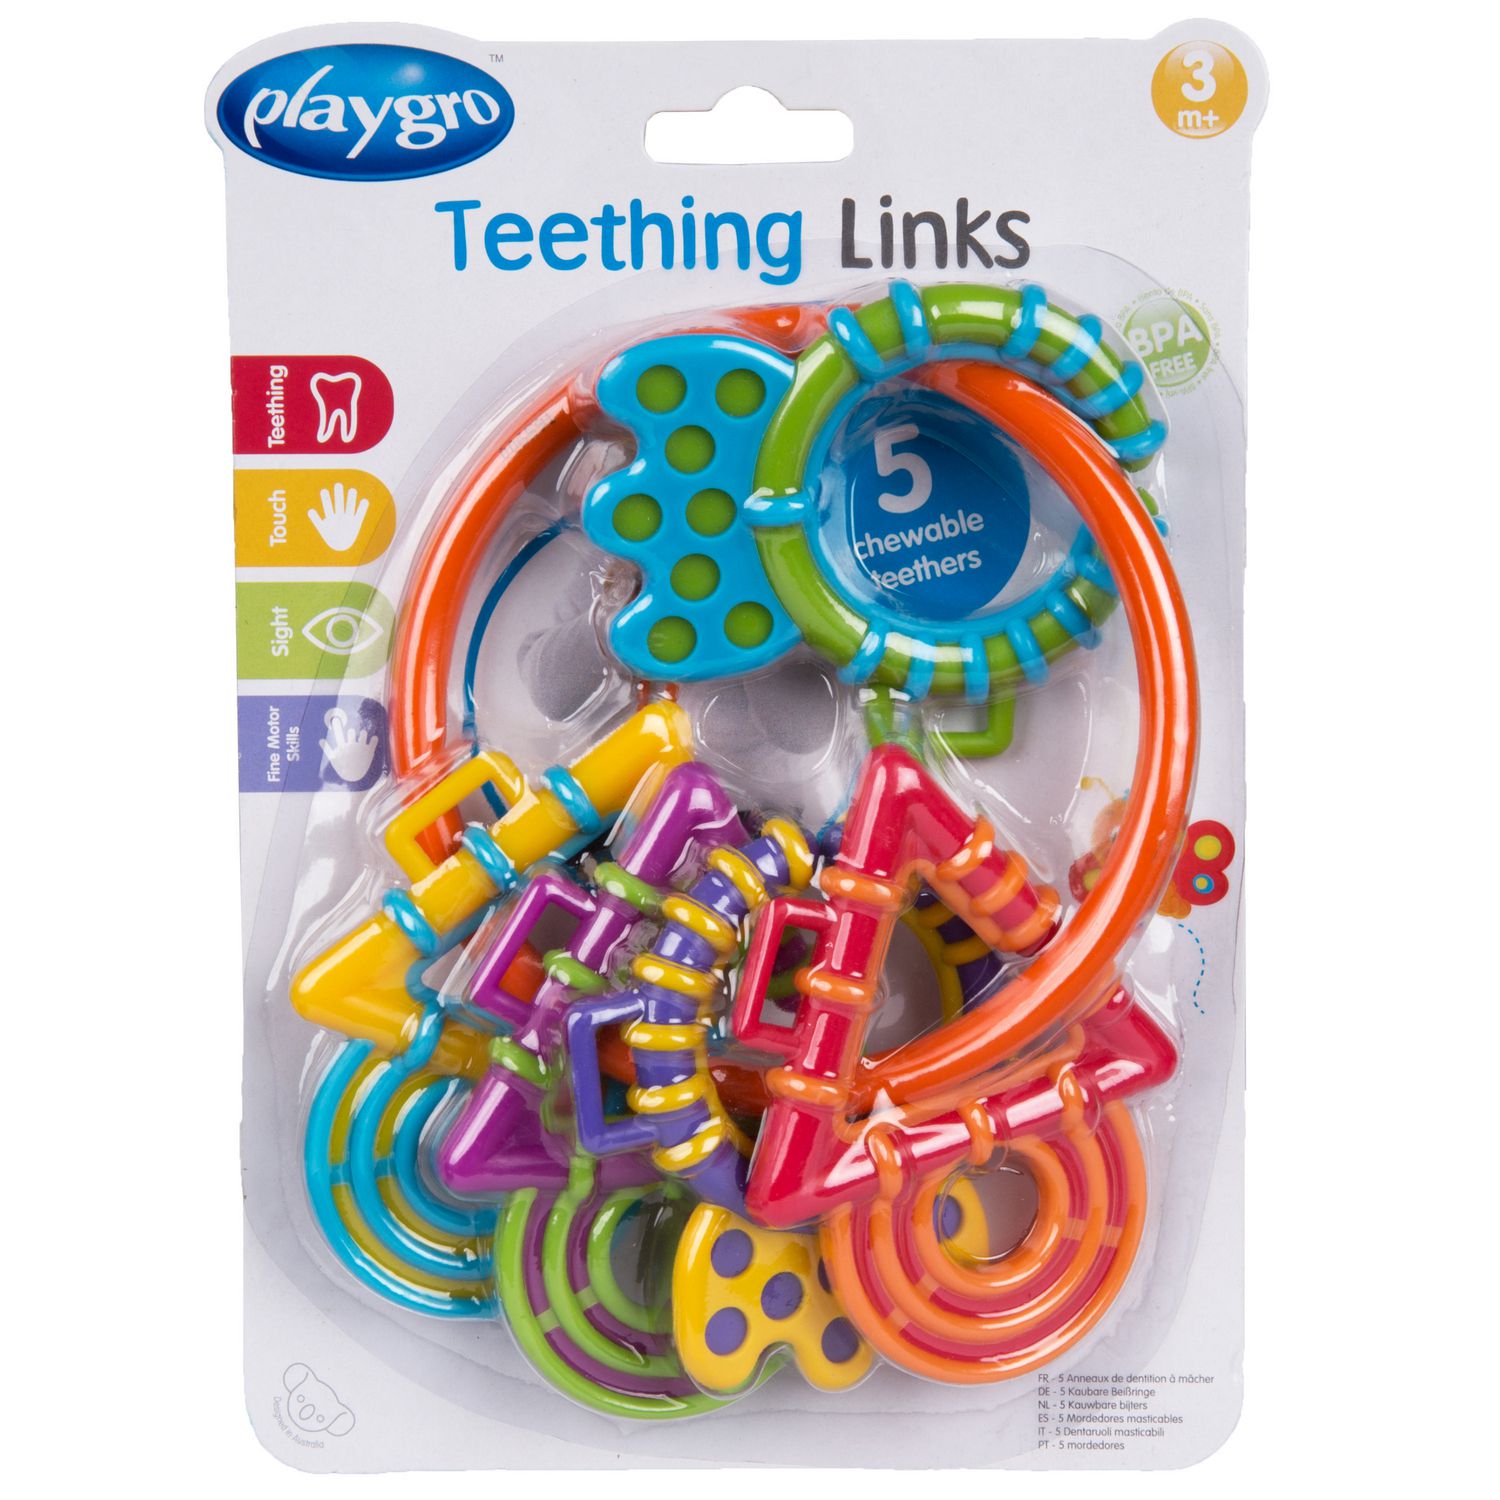 Playgro Teething Links | Walmart Canada